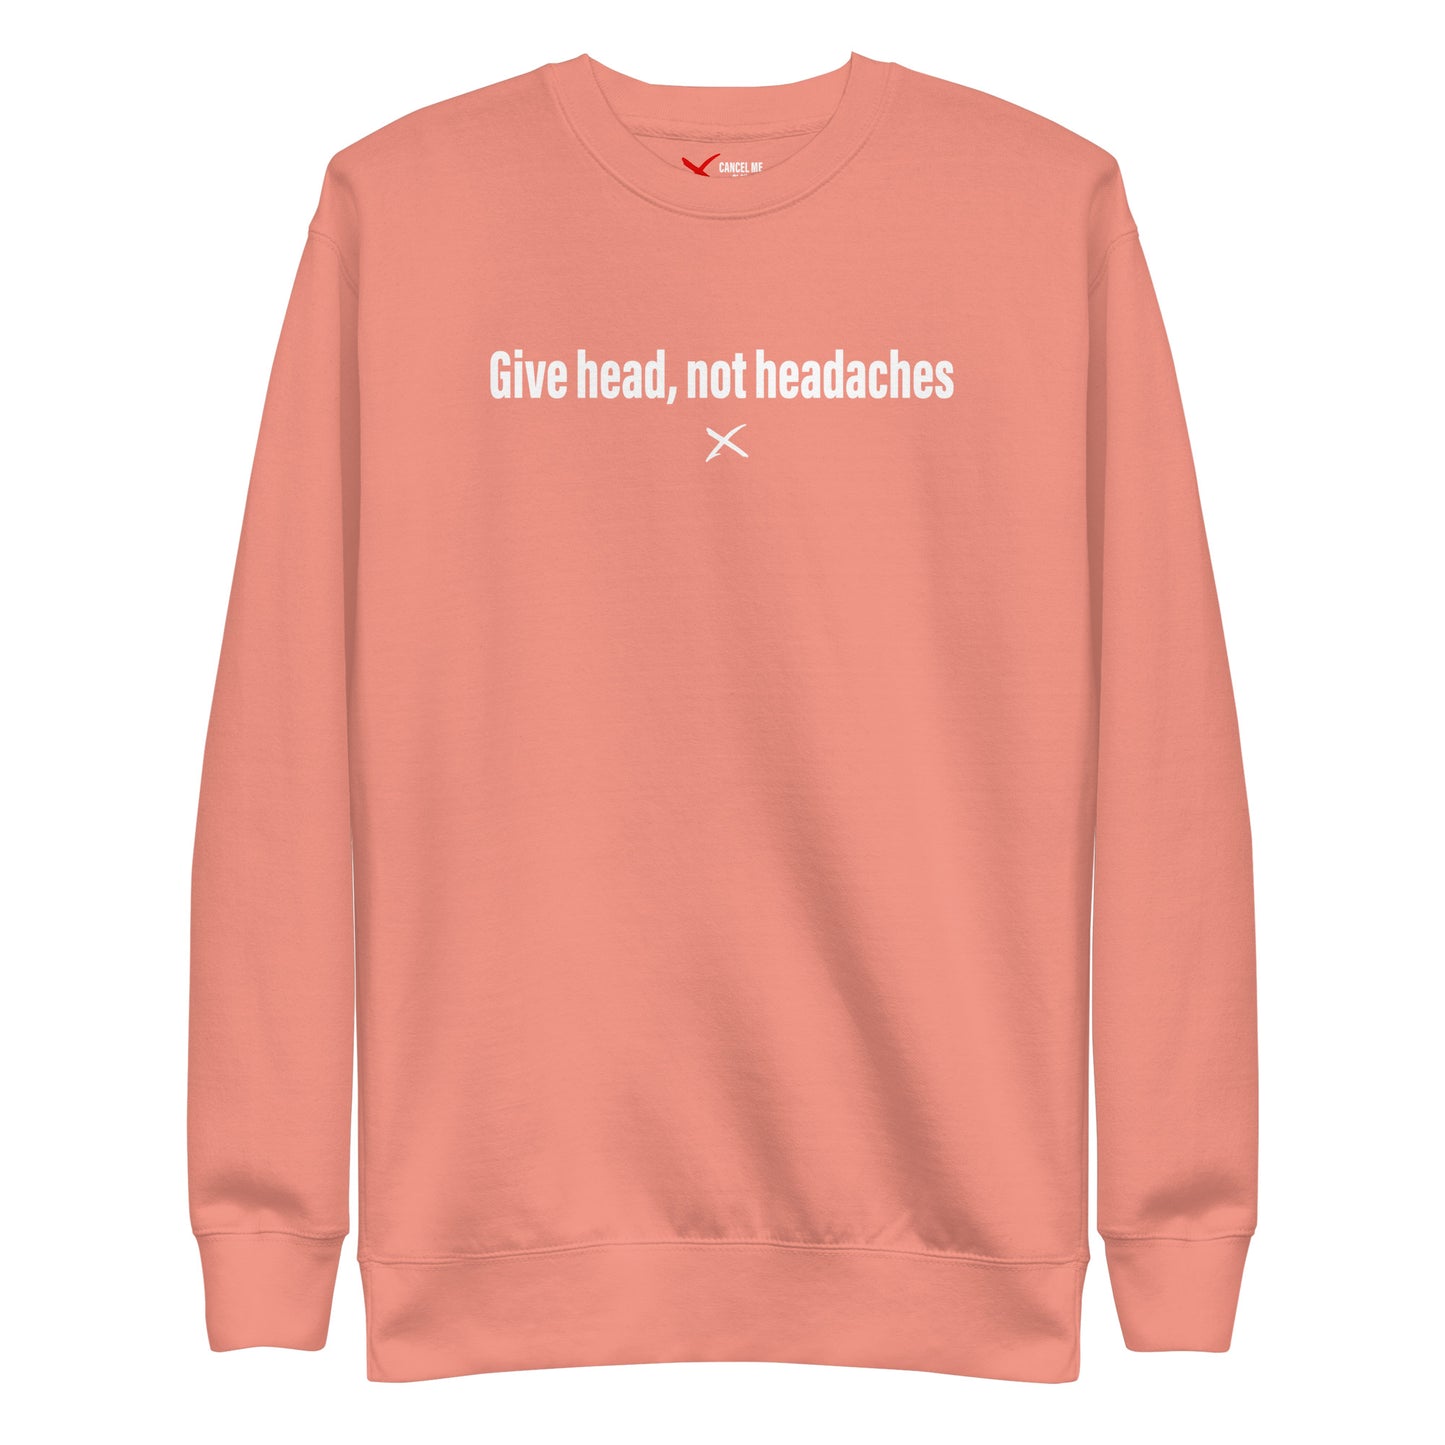 Give head, not headaches - Sweatshirt